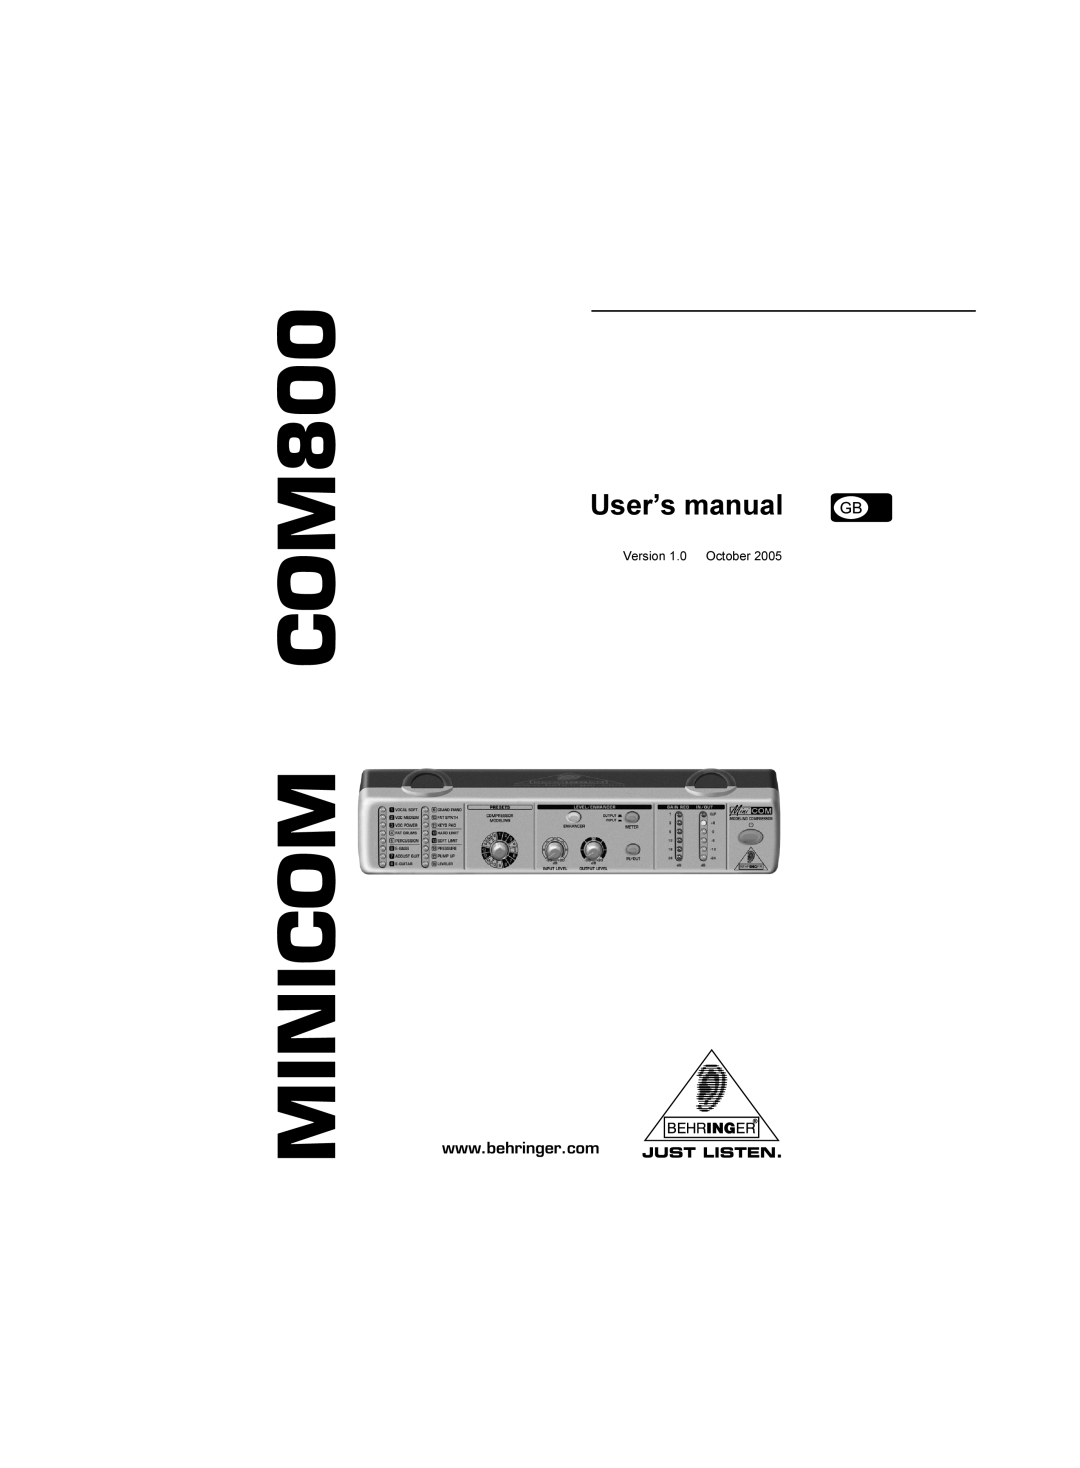 Behringer manual MINICOM COM800, User’s manual 